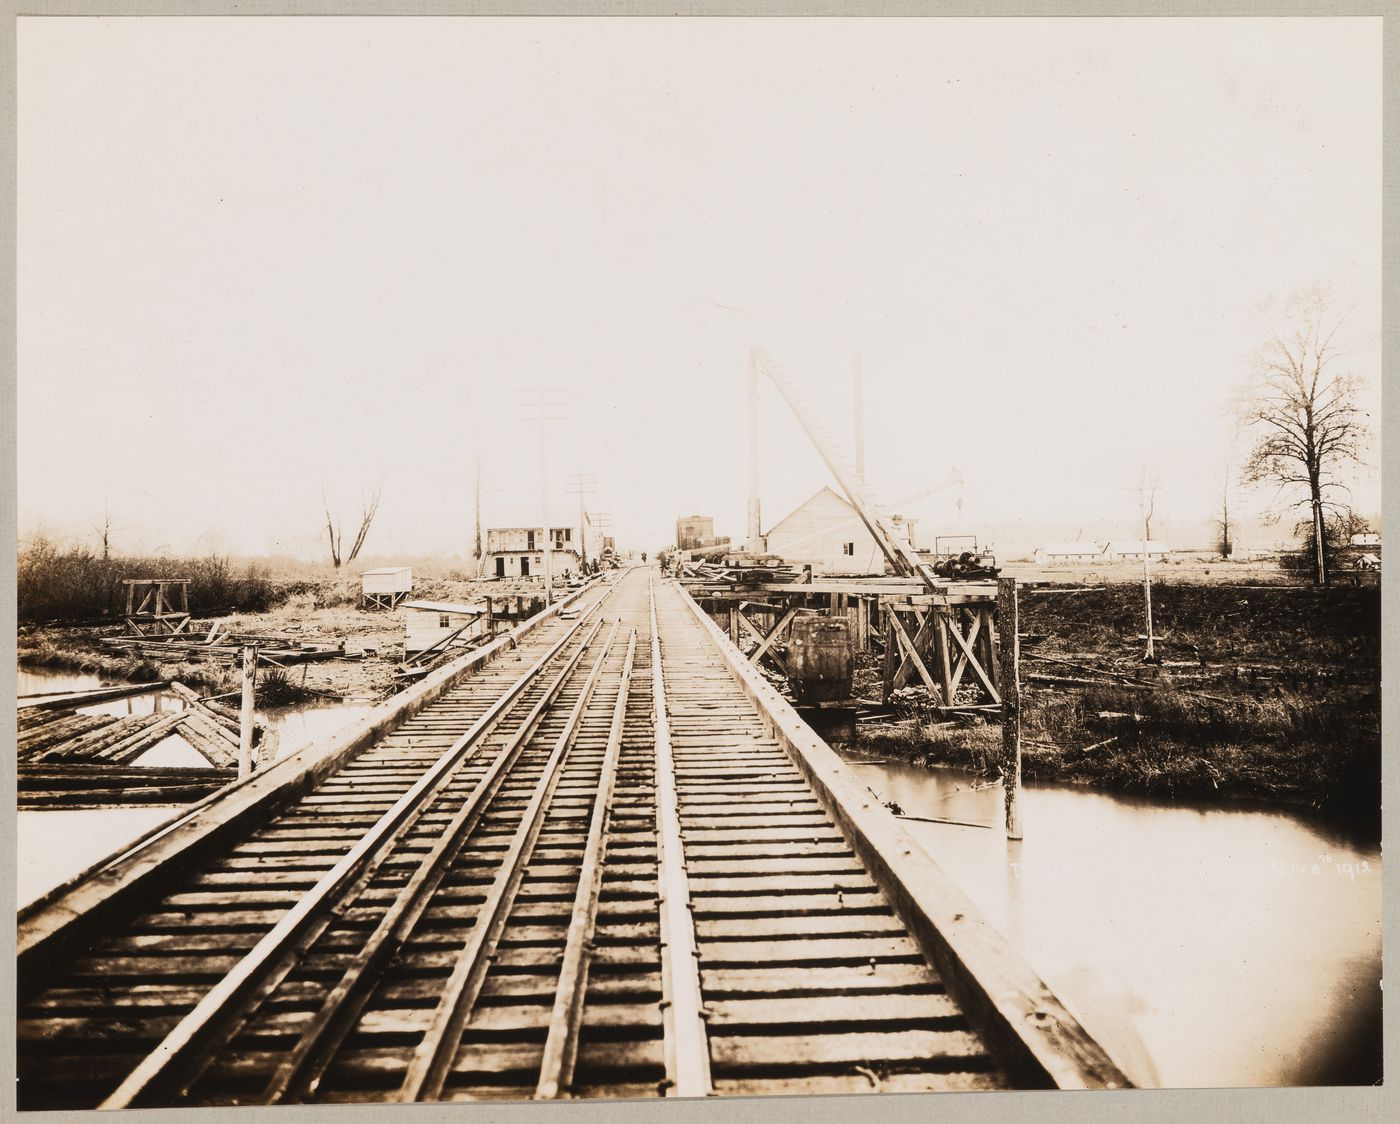 View of a Canadian Pacific Railroad Company bridge under construction, Coquitlam (now Port Coquitlam), British Columbia